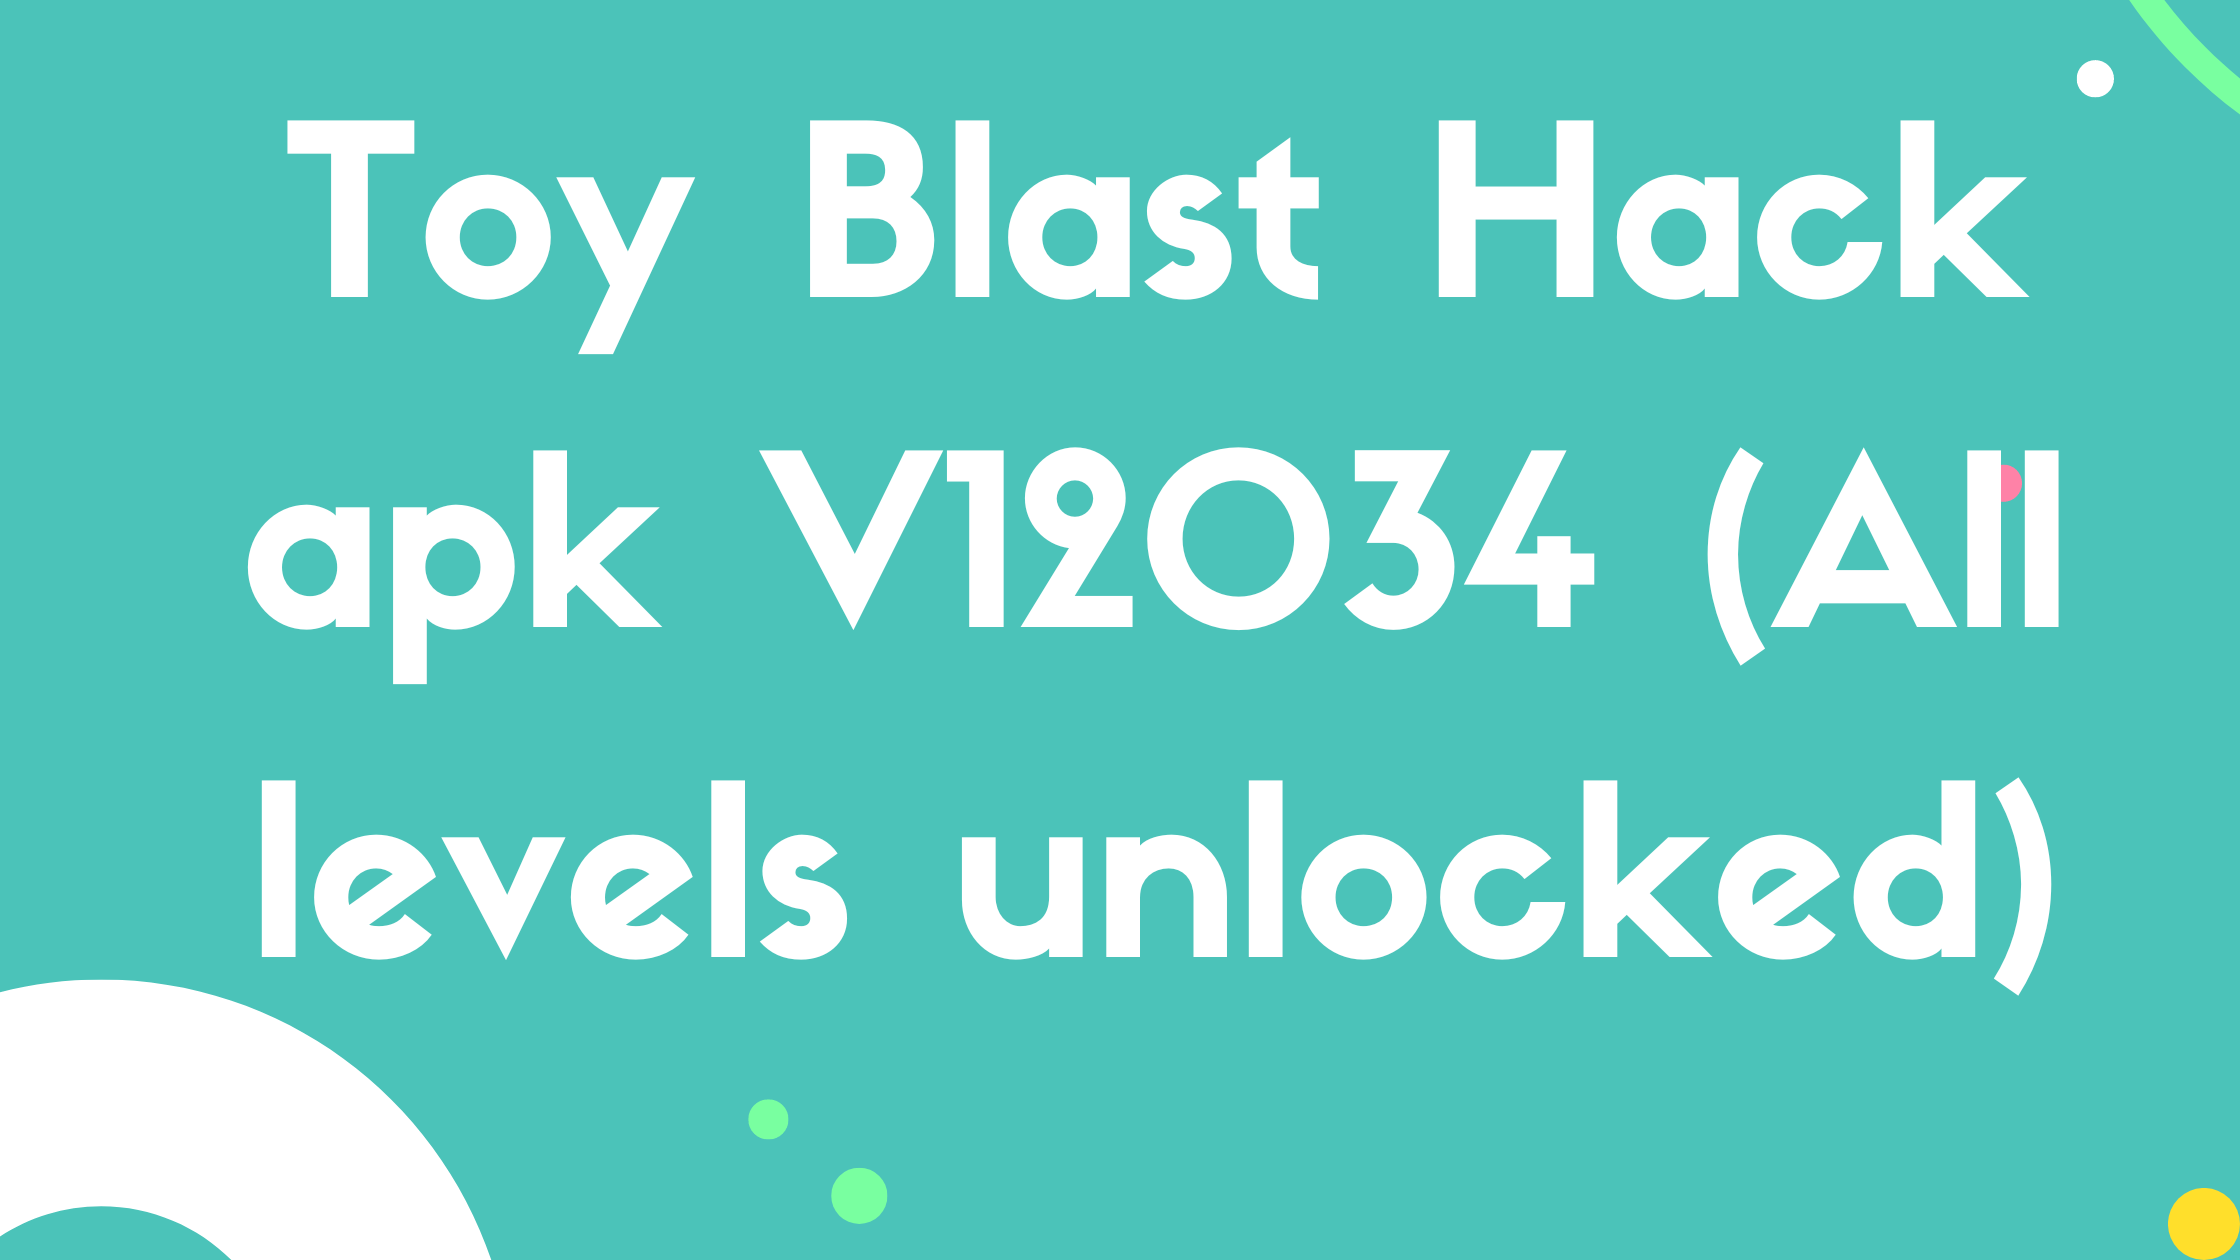 Toy Blast Hack apk V12034 (All levels unlocked)